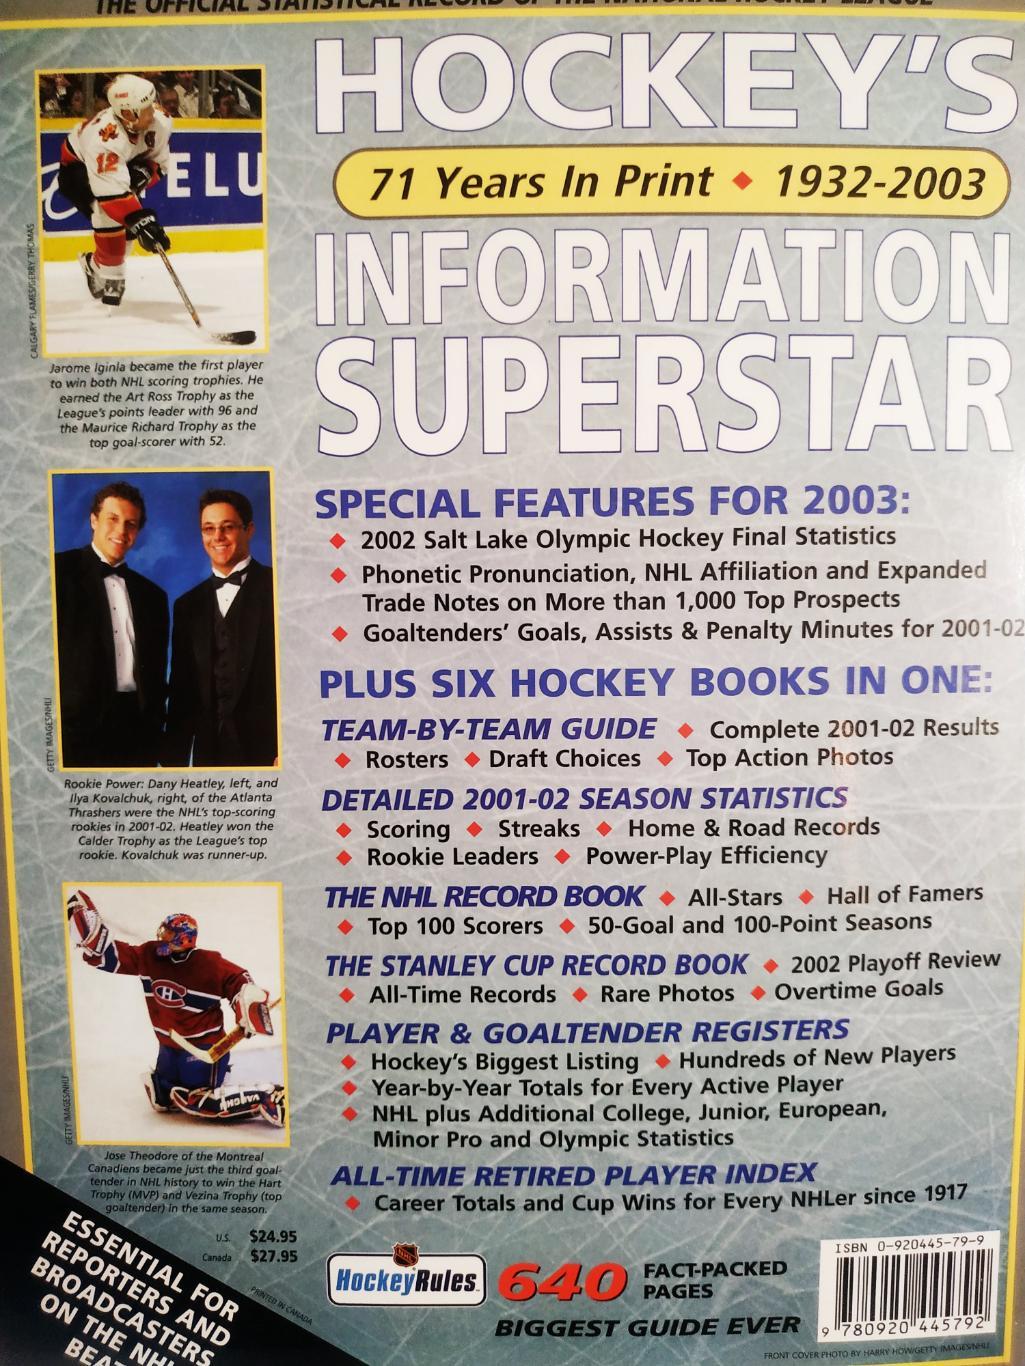 ХОККЕЙ ОФИЦИАЛЬНЫЙ СПРАВОЧНИК НХЛ 2003 NHL OFFICIAL GUIDE AND RECORD BOOK 7